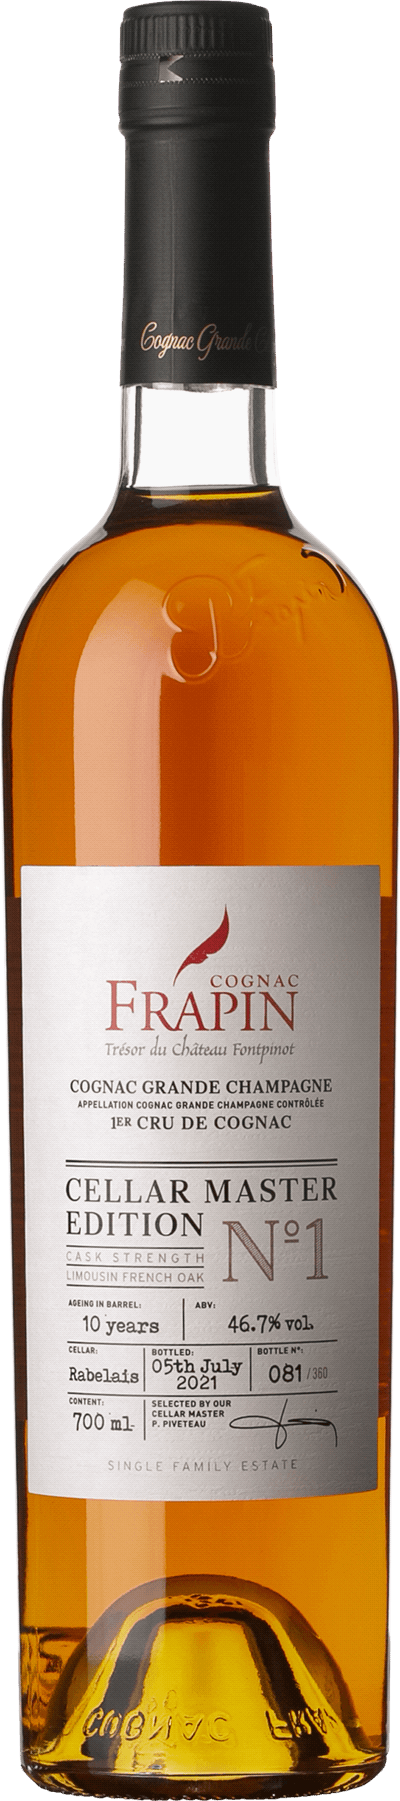 Cognac Frapin Cask strength Cellar Master edition #1